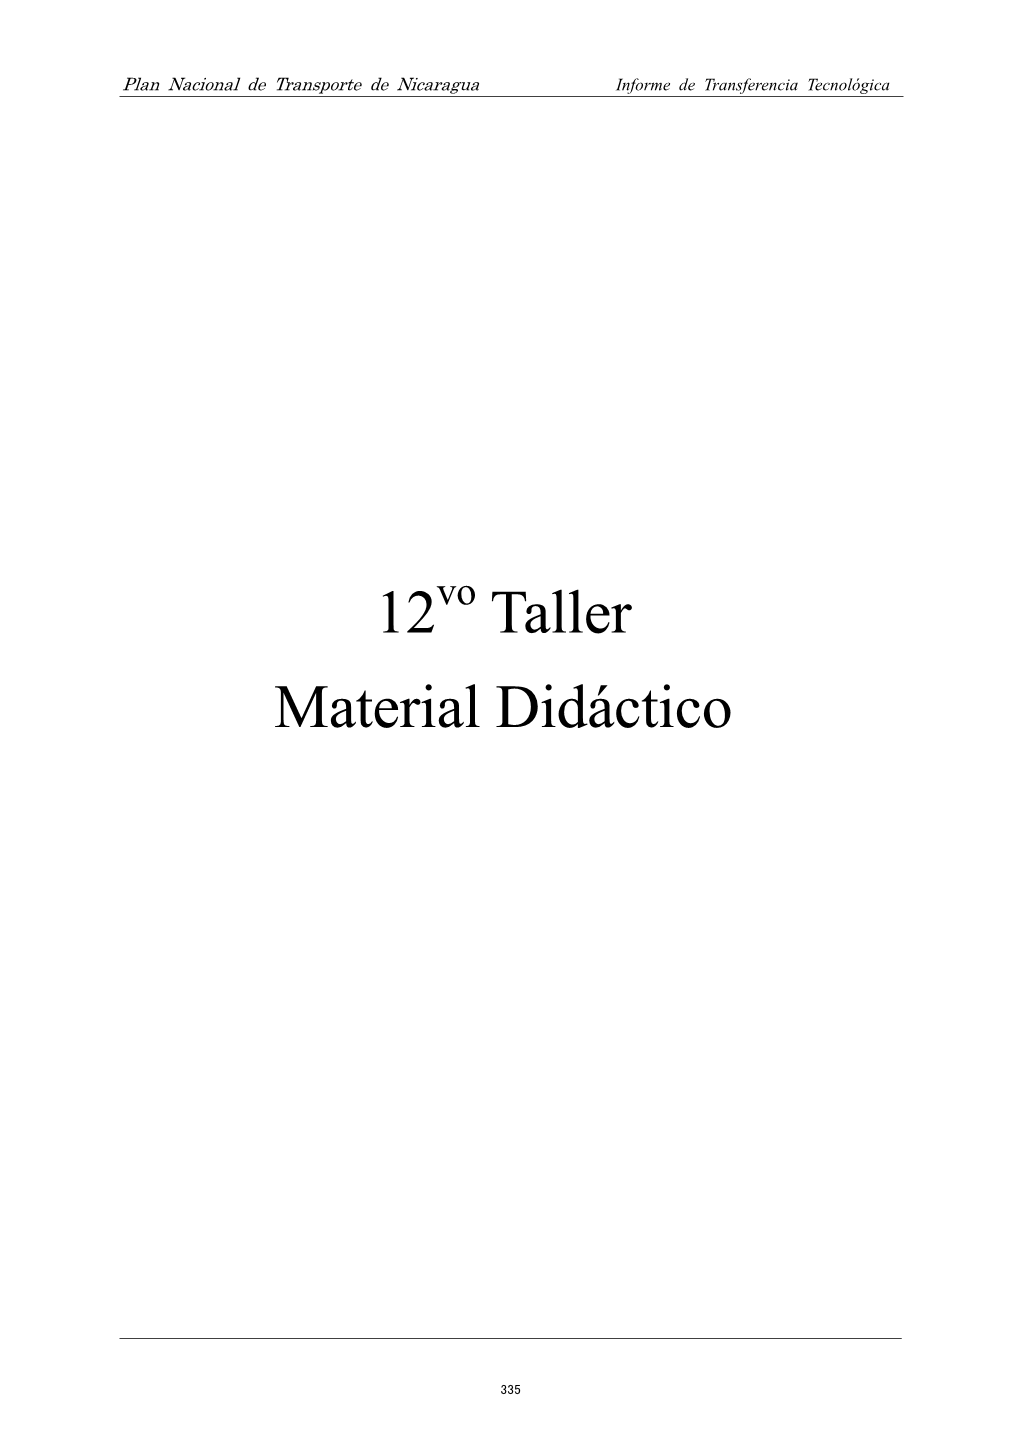 12 Taller Material Didáctico